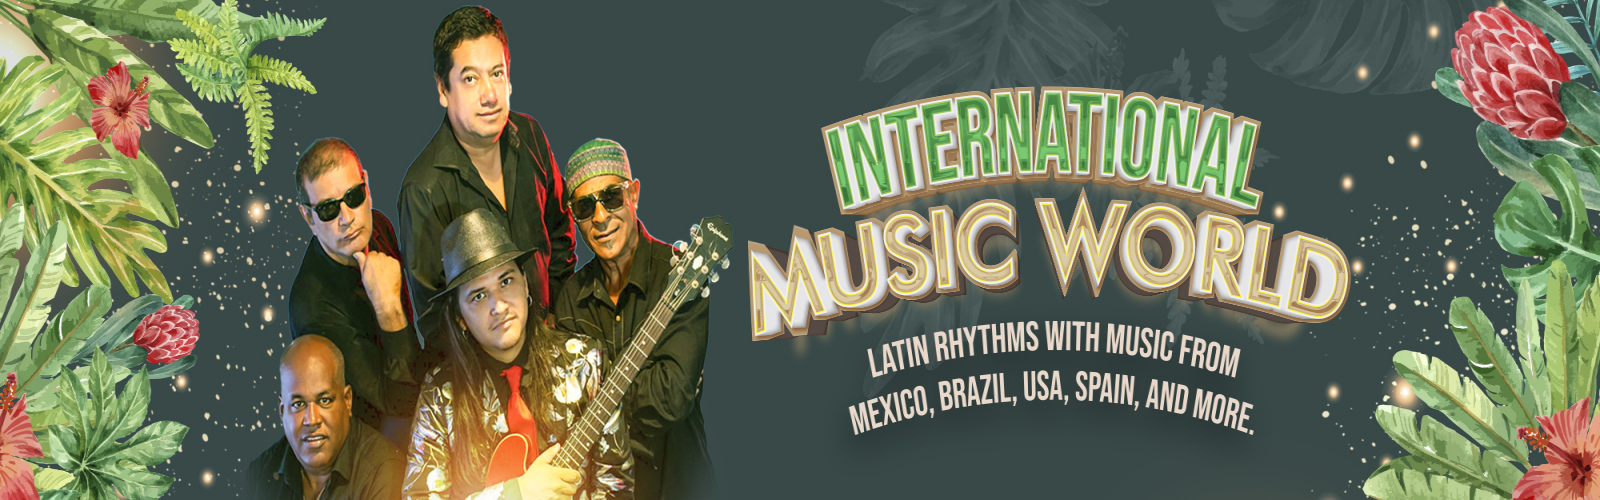 INTERNATIONAL MUSIC WORLD